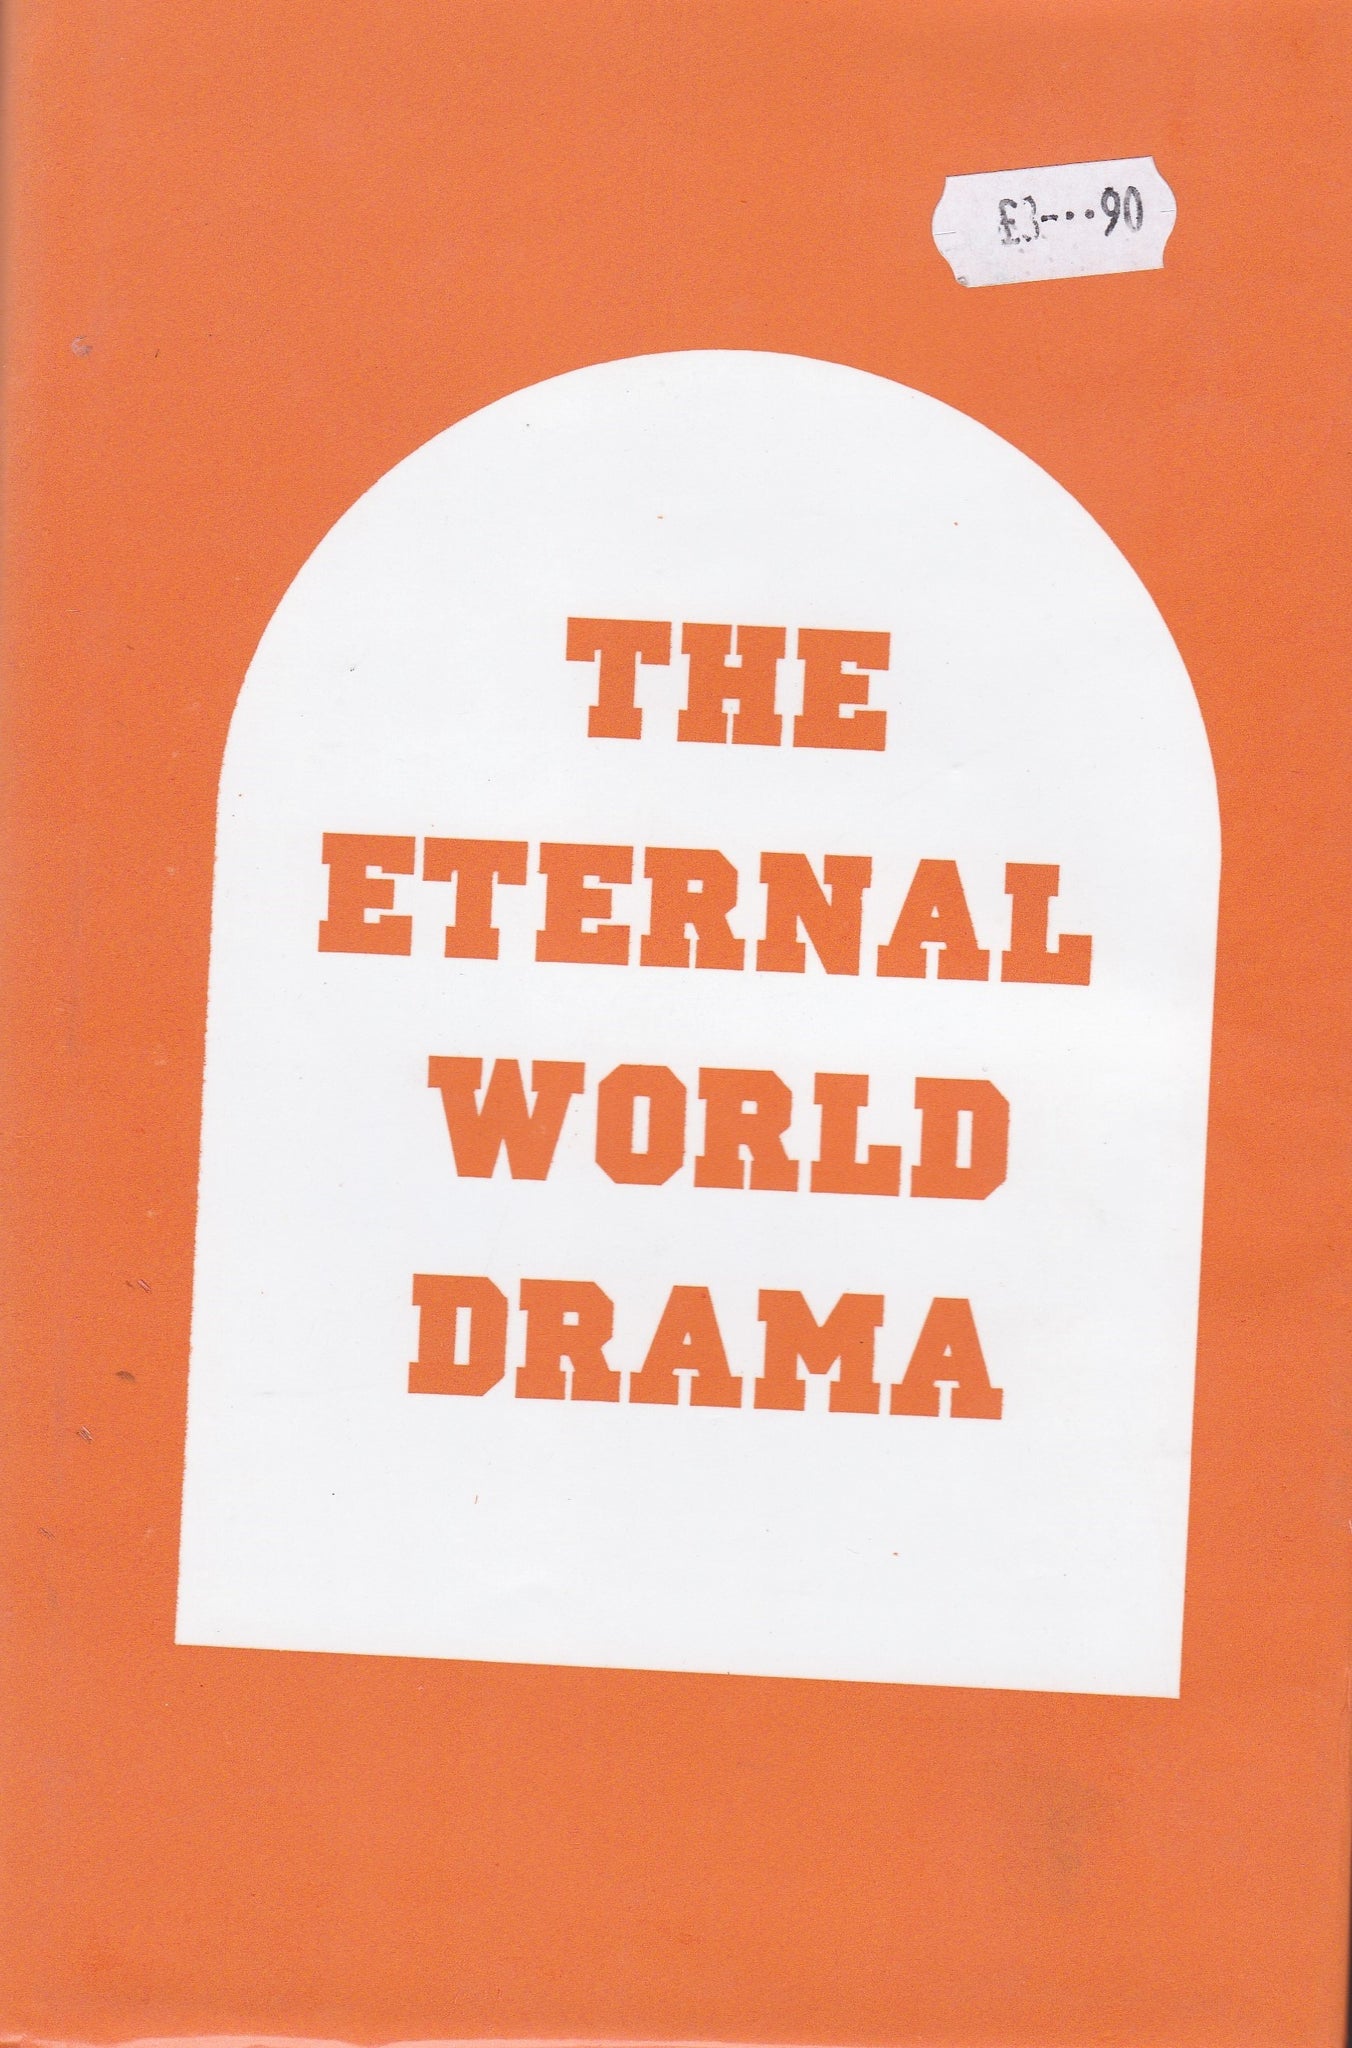 The Eternal World Dharma